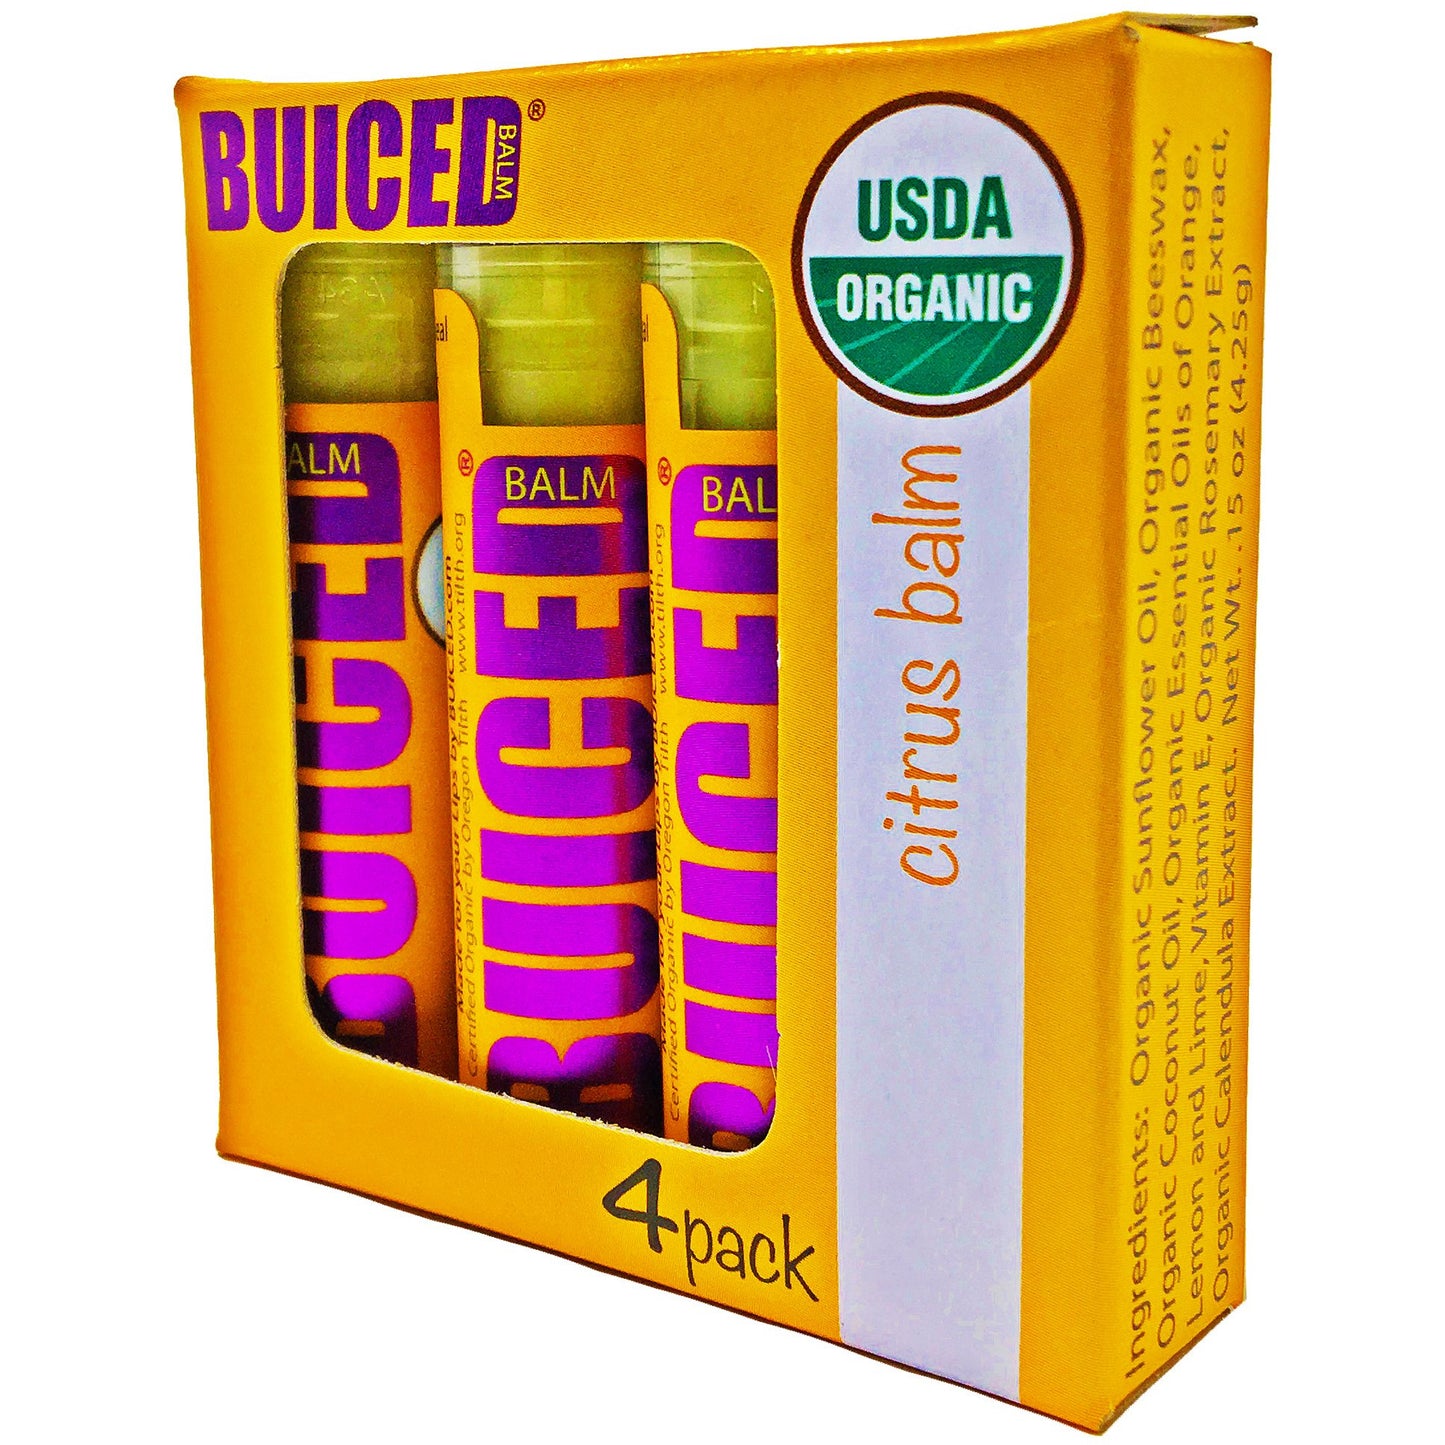 USDA Certified Organic - Citrus 4pack - Buiced Liquid Multivitamin | Gluten Free Vitamins | GMO Free Vitamins | Made in USA Vitamins | Best Multivitamin 